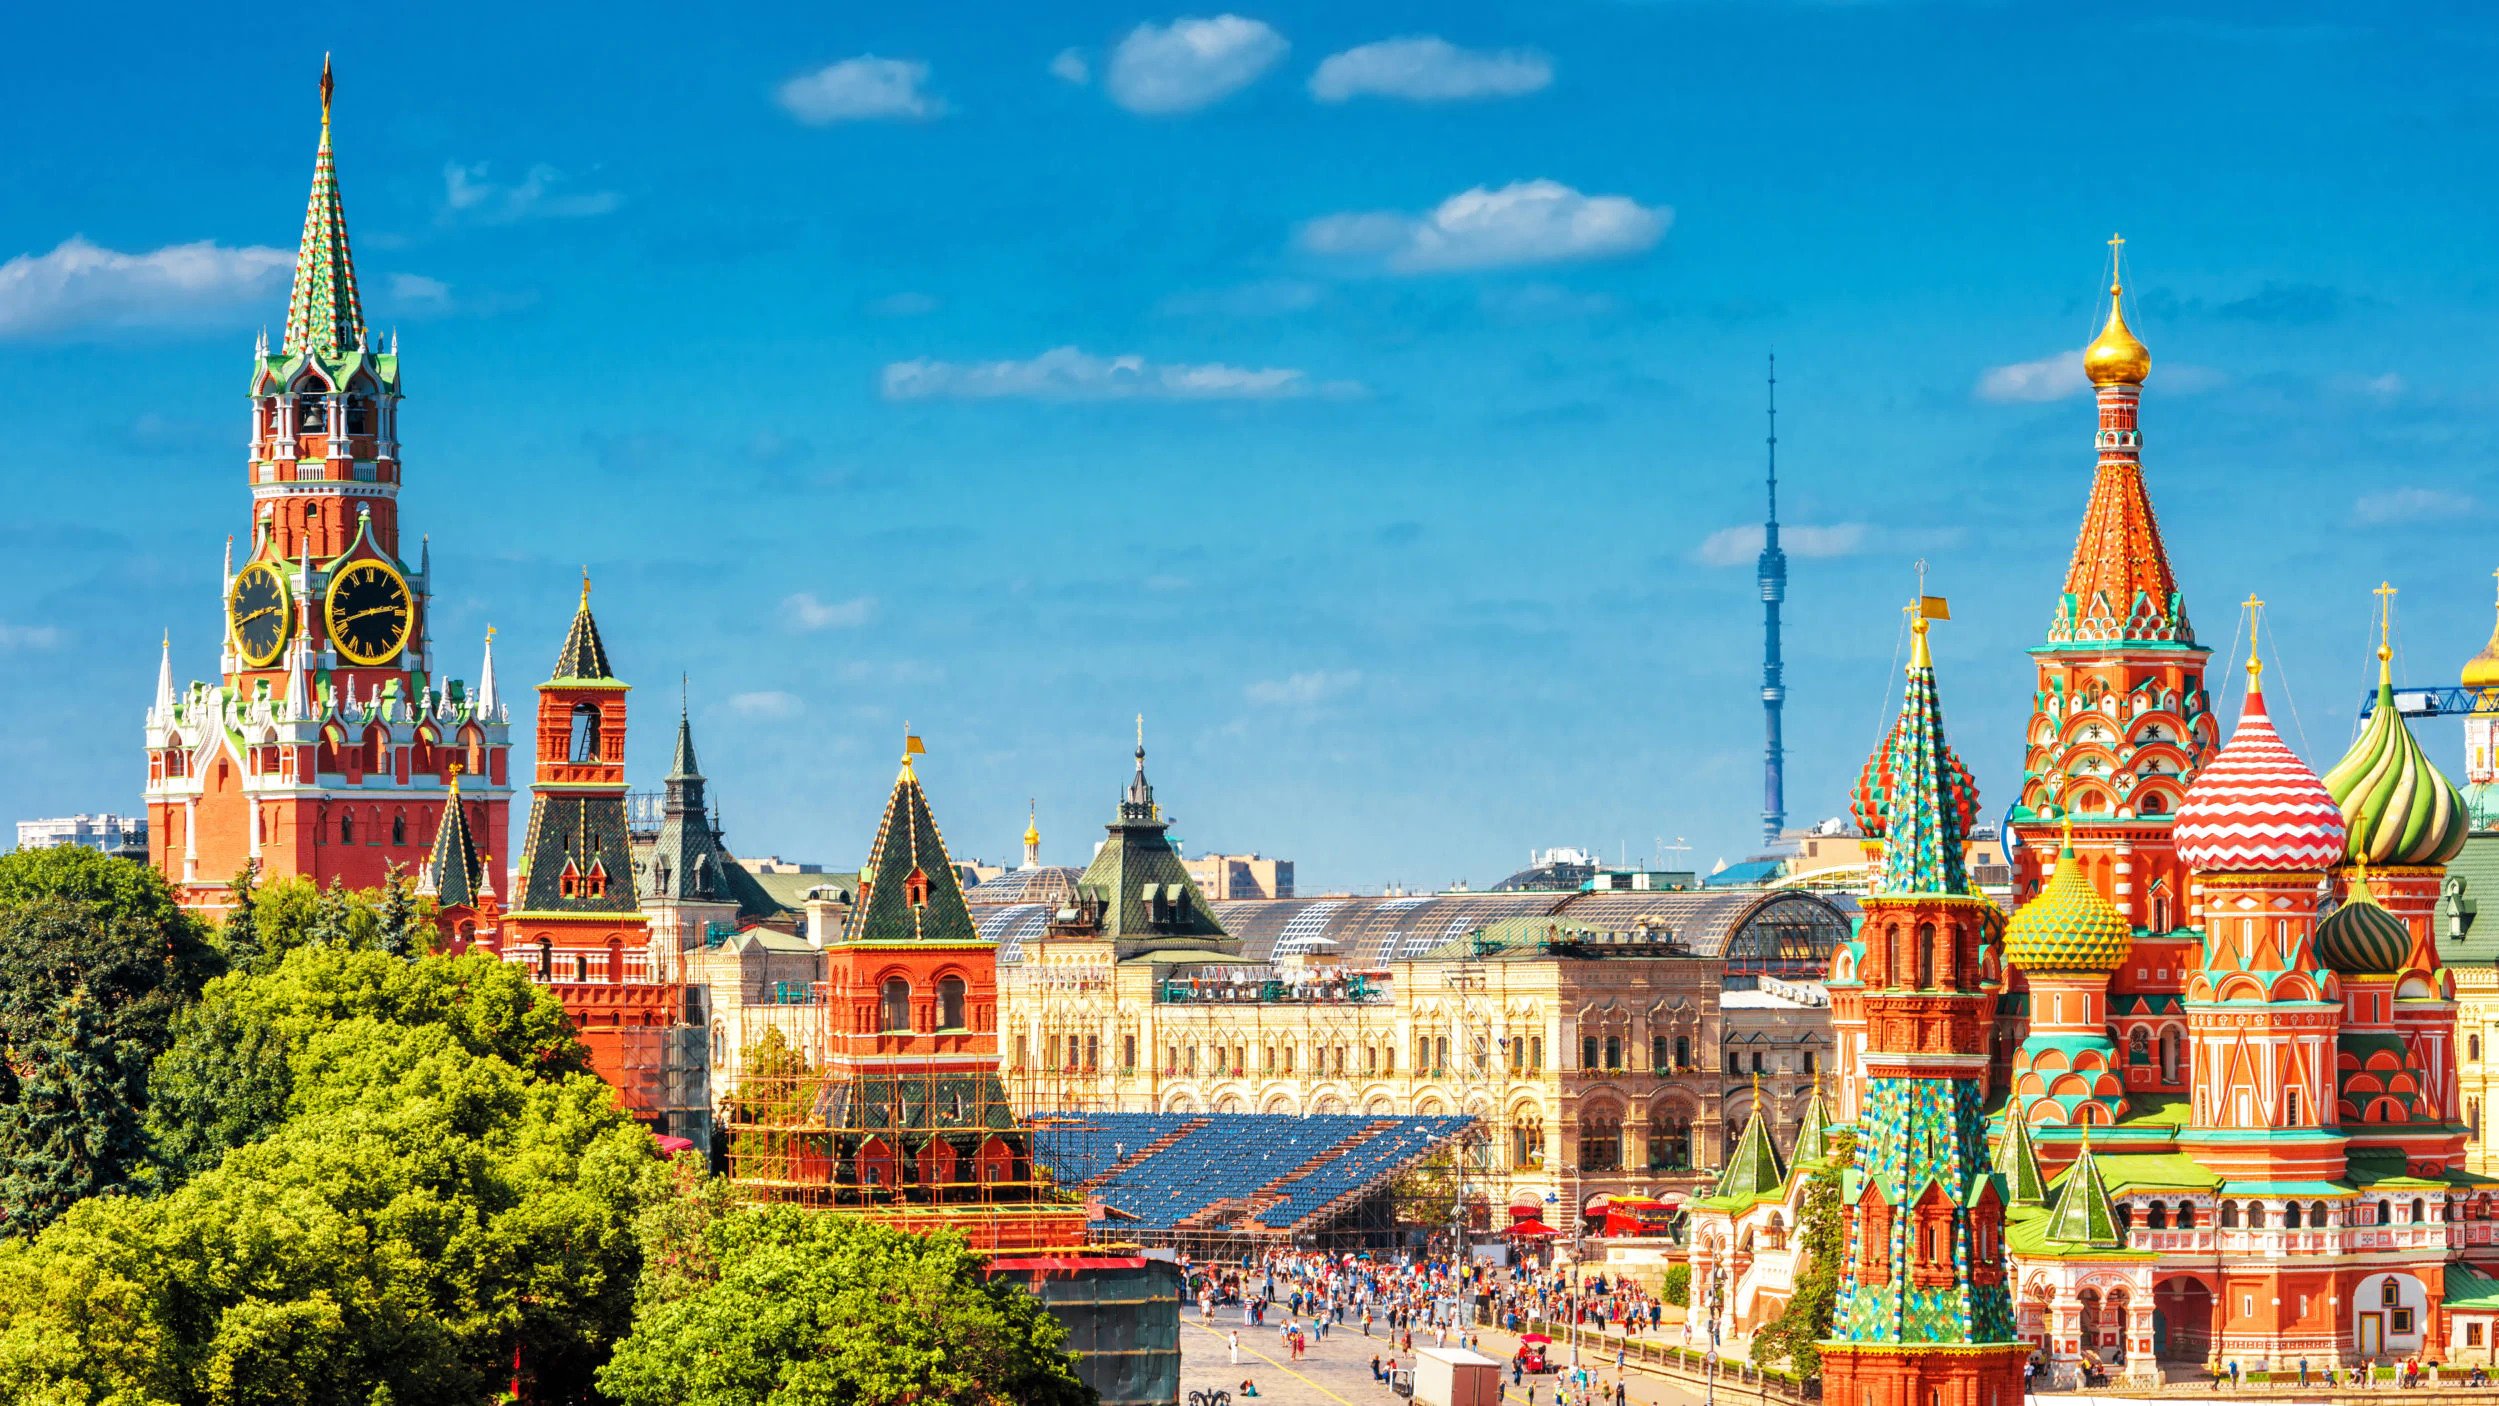 تور مسکو سنت پترزبورگ روسيه از تهران ويژه تابستان 1402 - آژانس هواپيمايي و جهانگردي گلبانگ شيراز